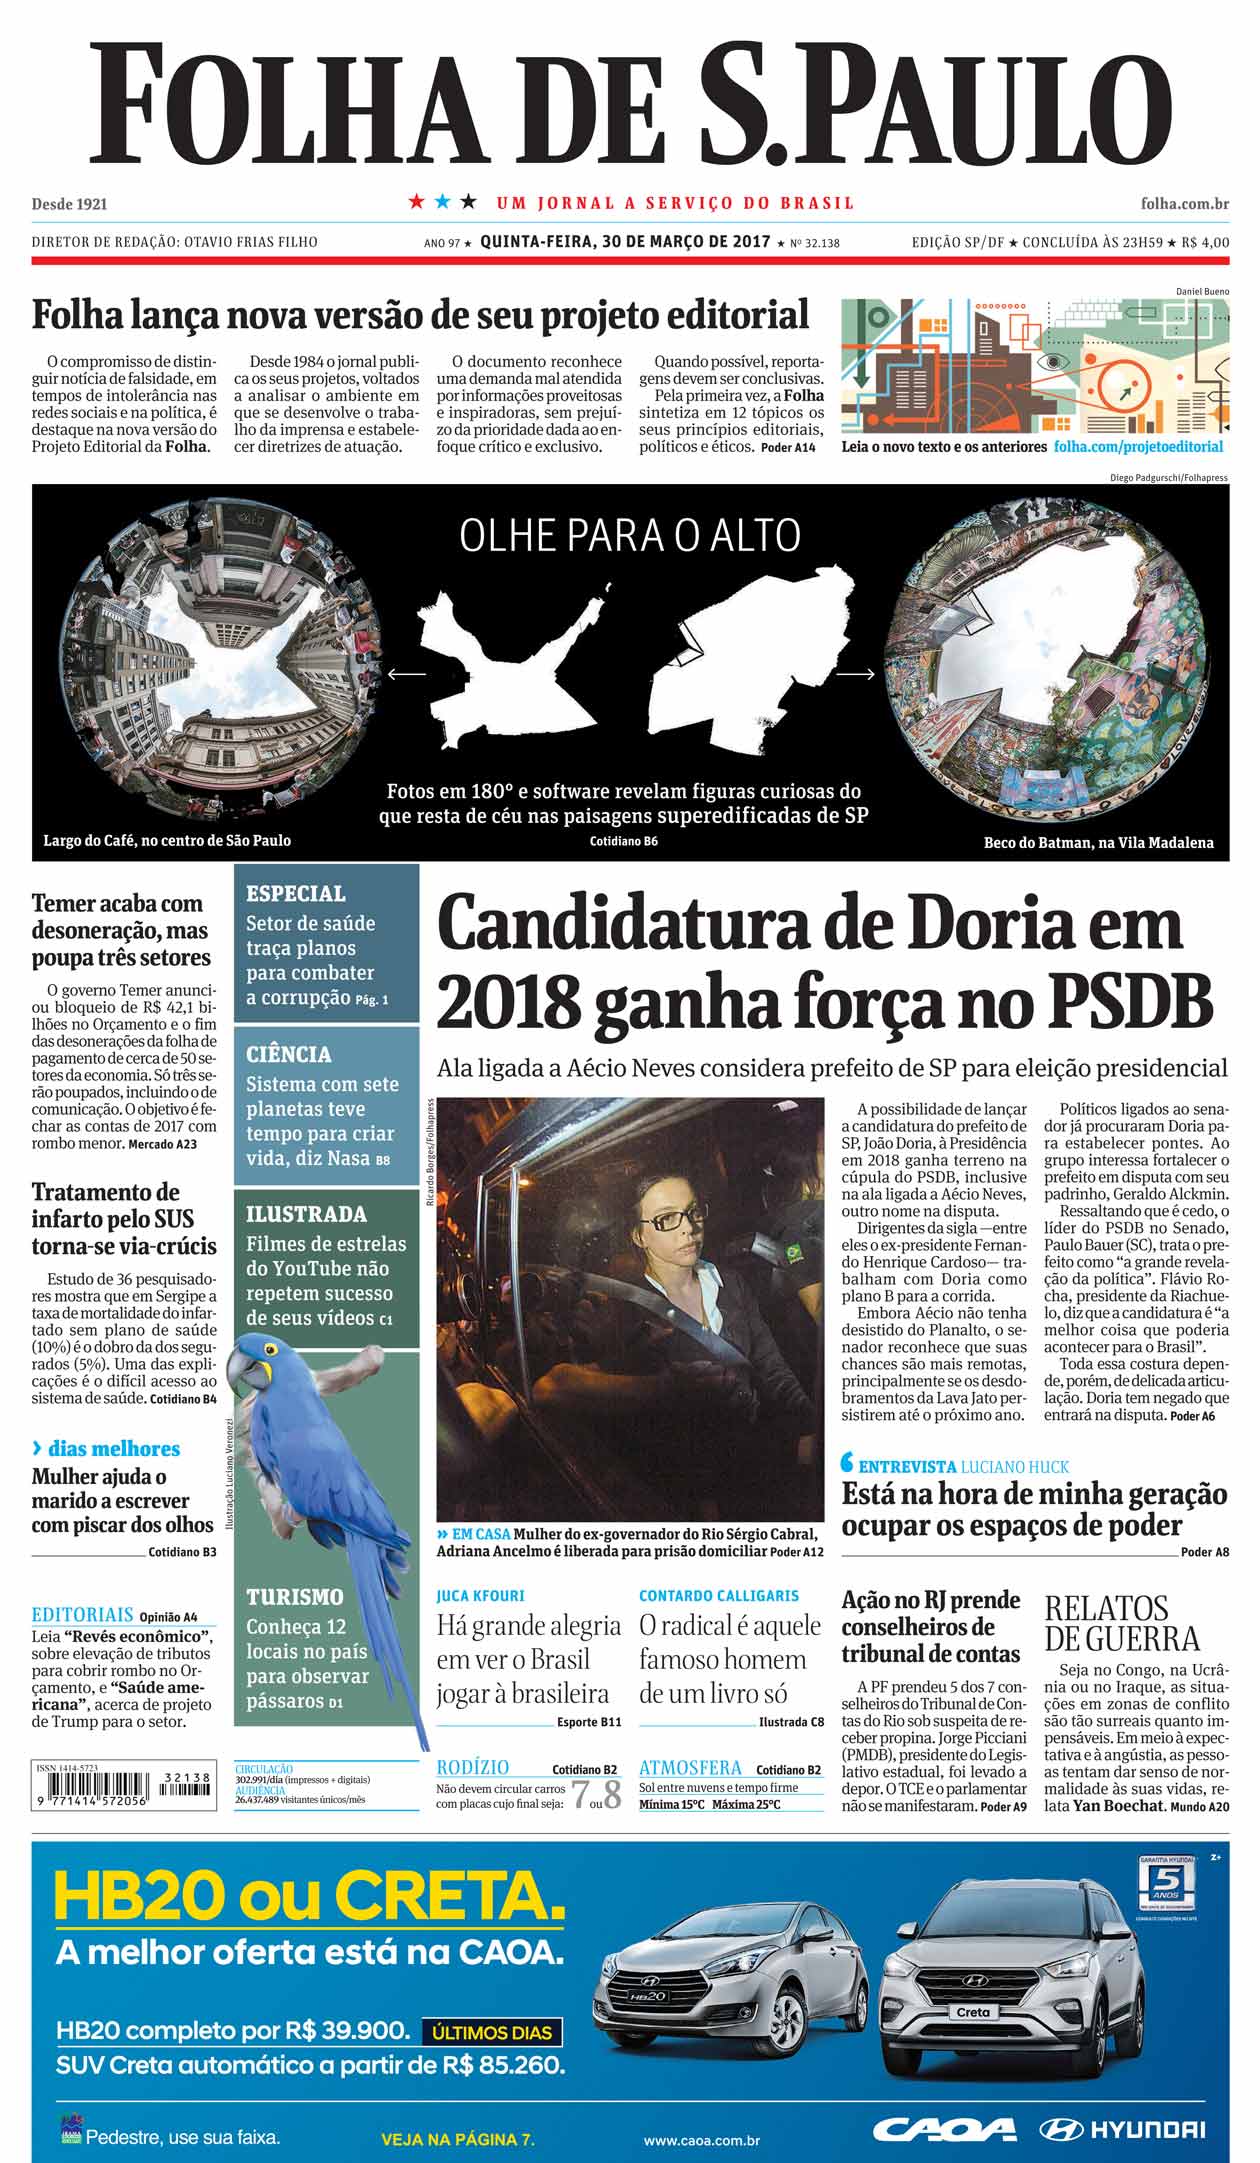 Capa Folha de S.Paulo Edio So Paulo